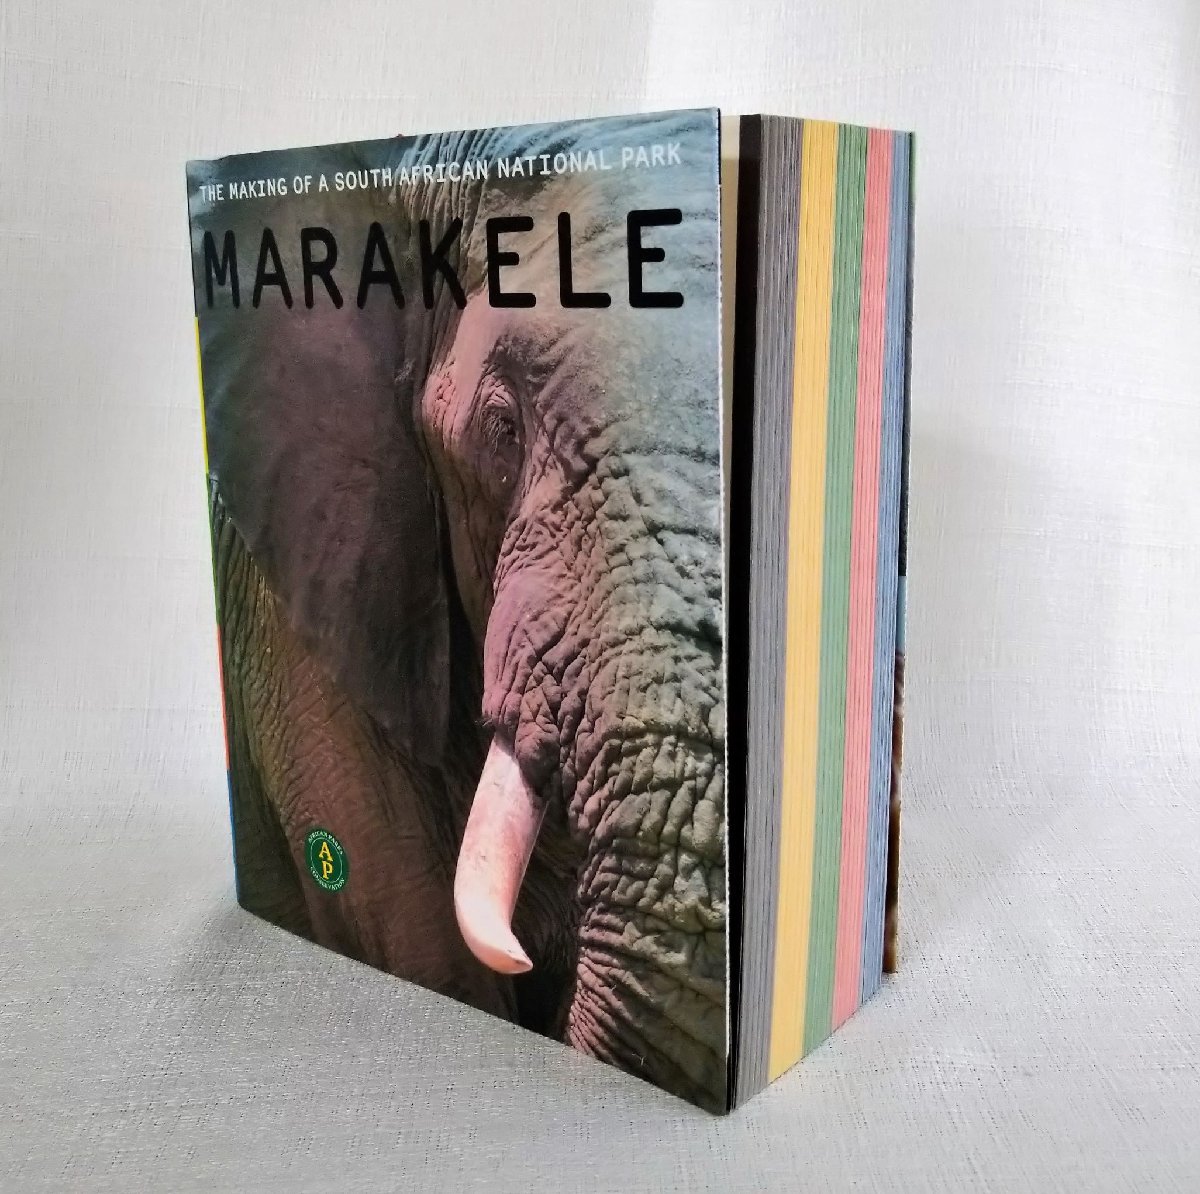 DVD付700ページ サファリ 野生動物 マラケレ国立公園 アフリカ洋書写真集 Marakele Making of a South African National Park アフリカゾウ_画像2